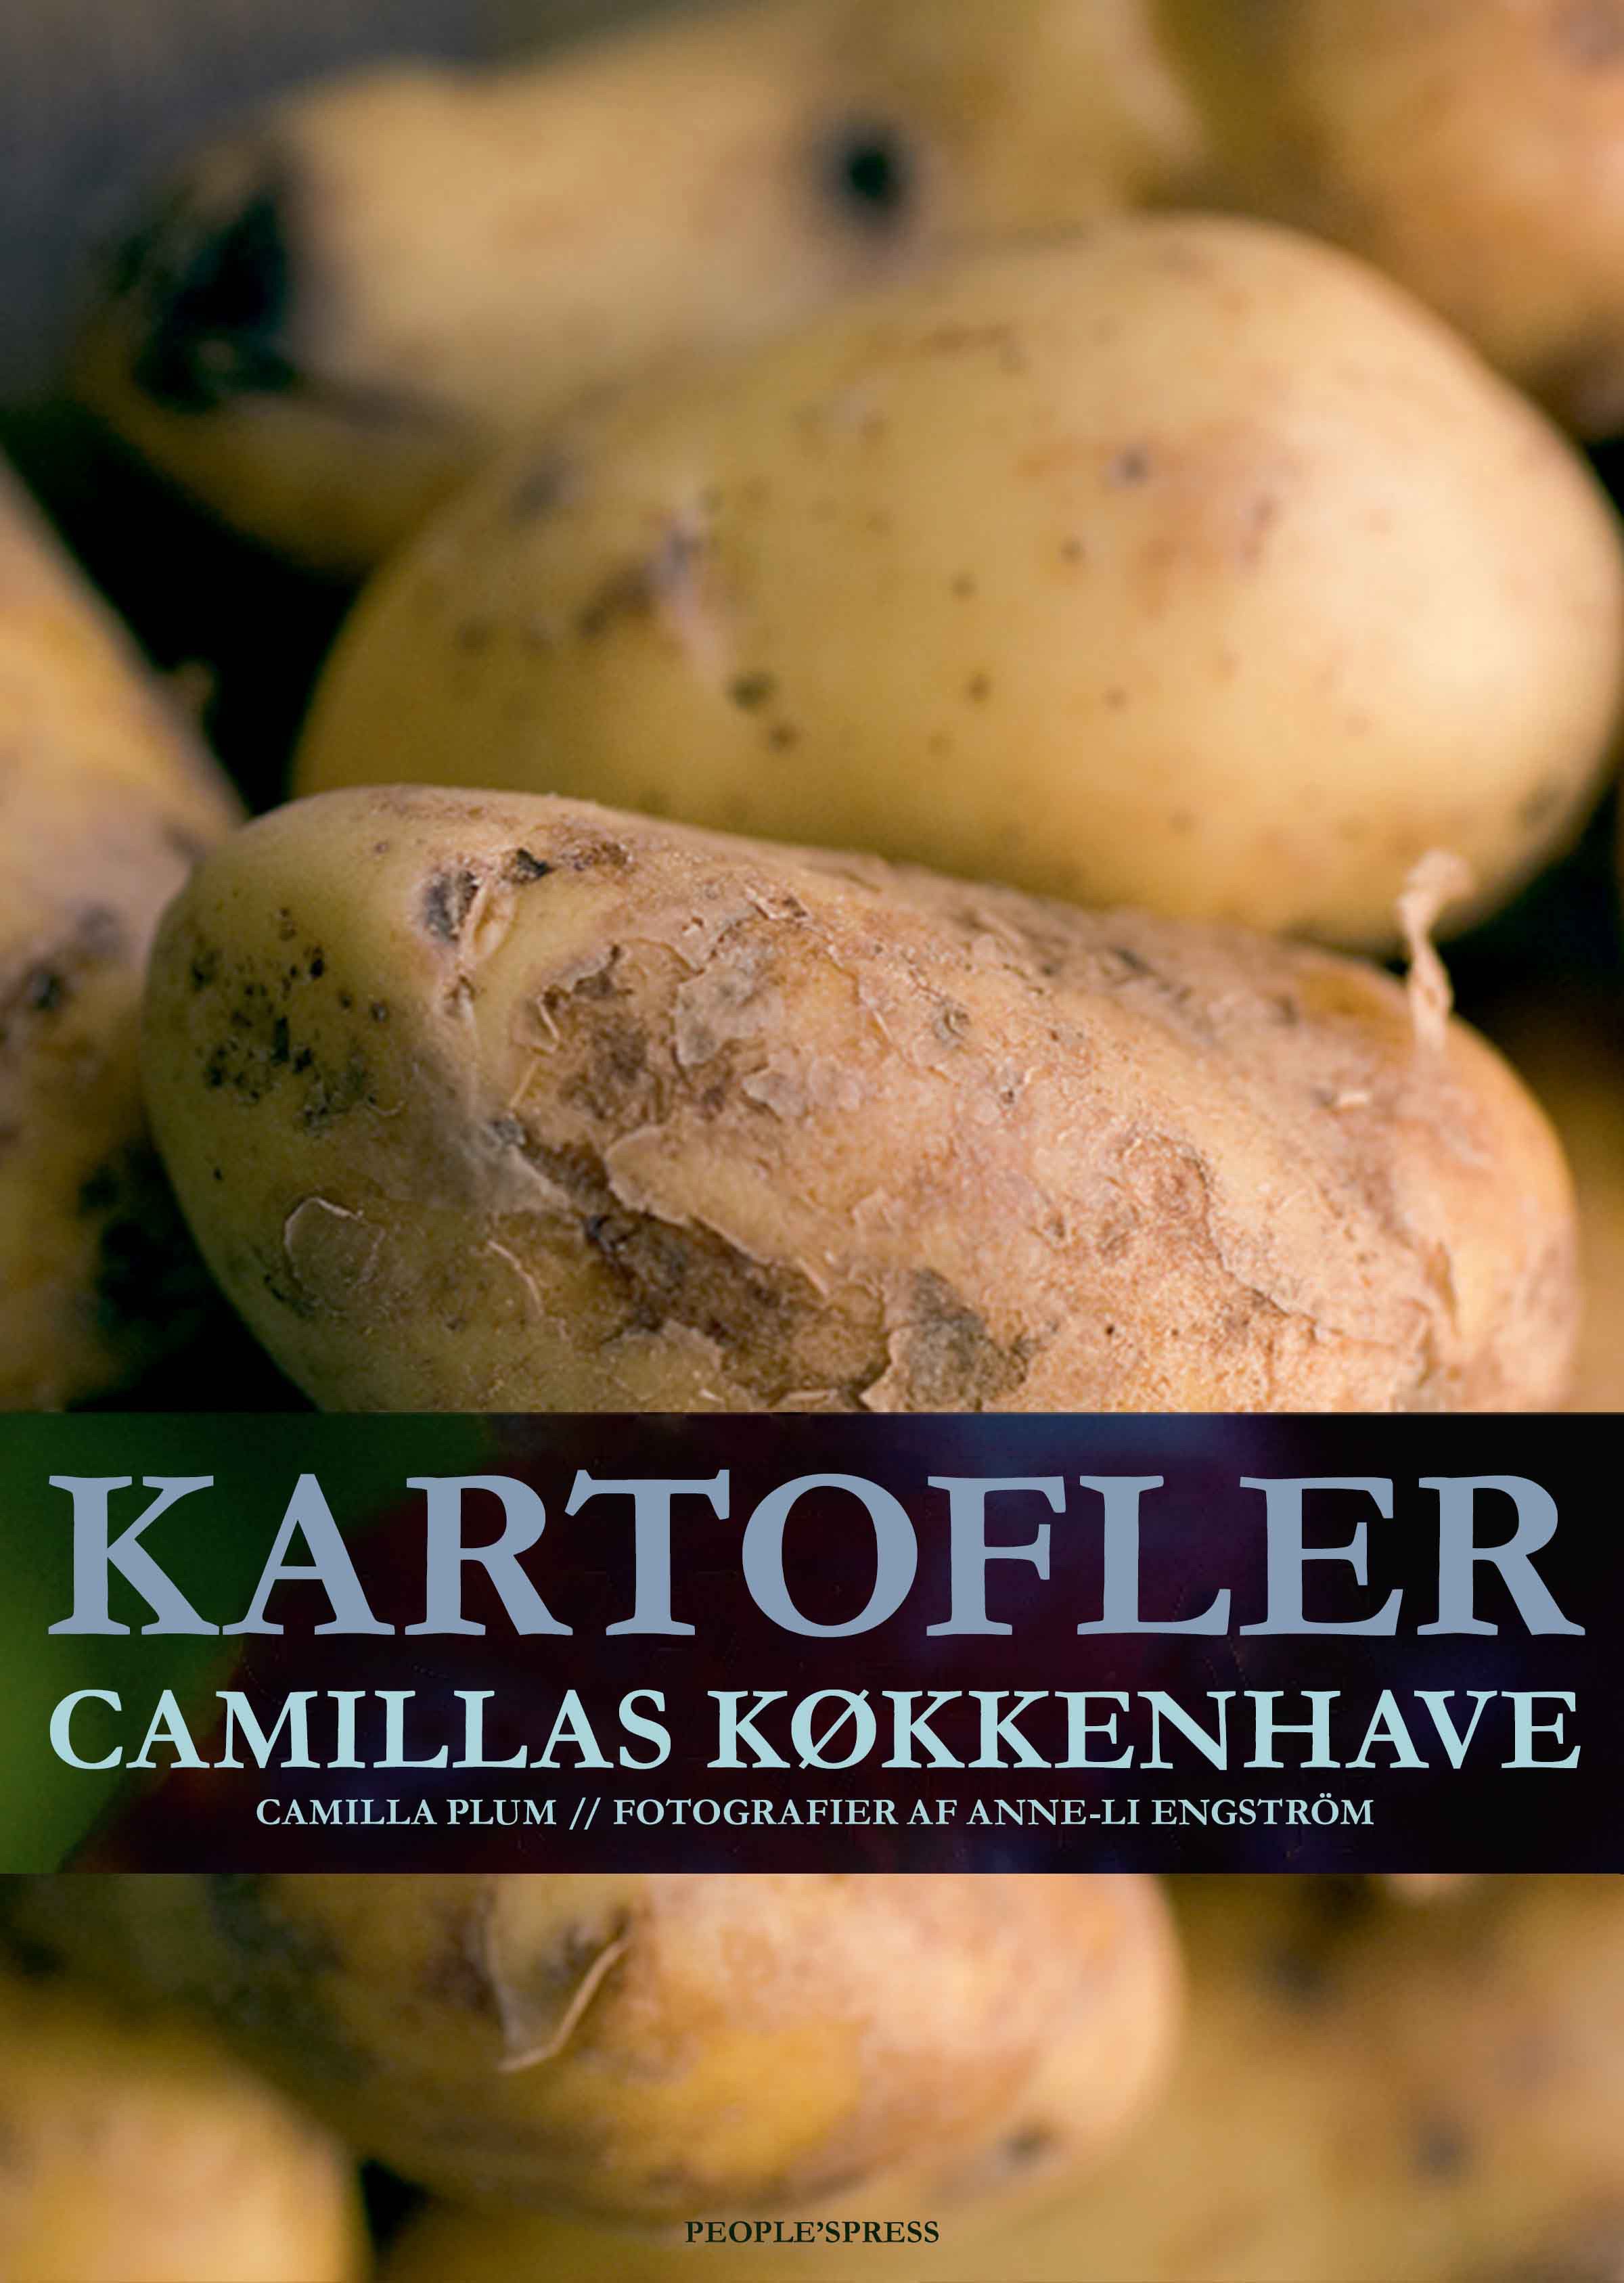 Kartofler - Camillas køkkenhave, e-bok av Camilla Plum